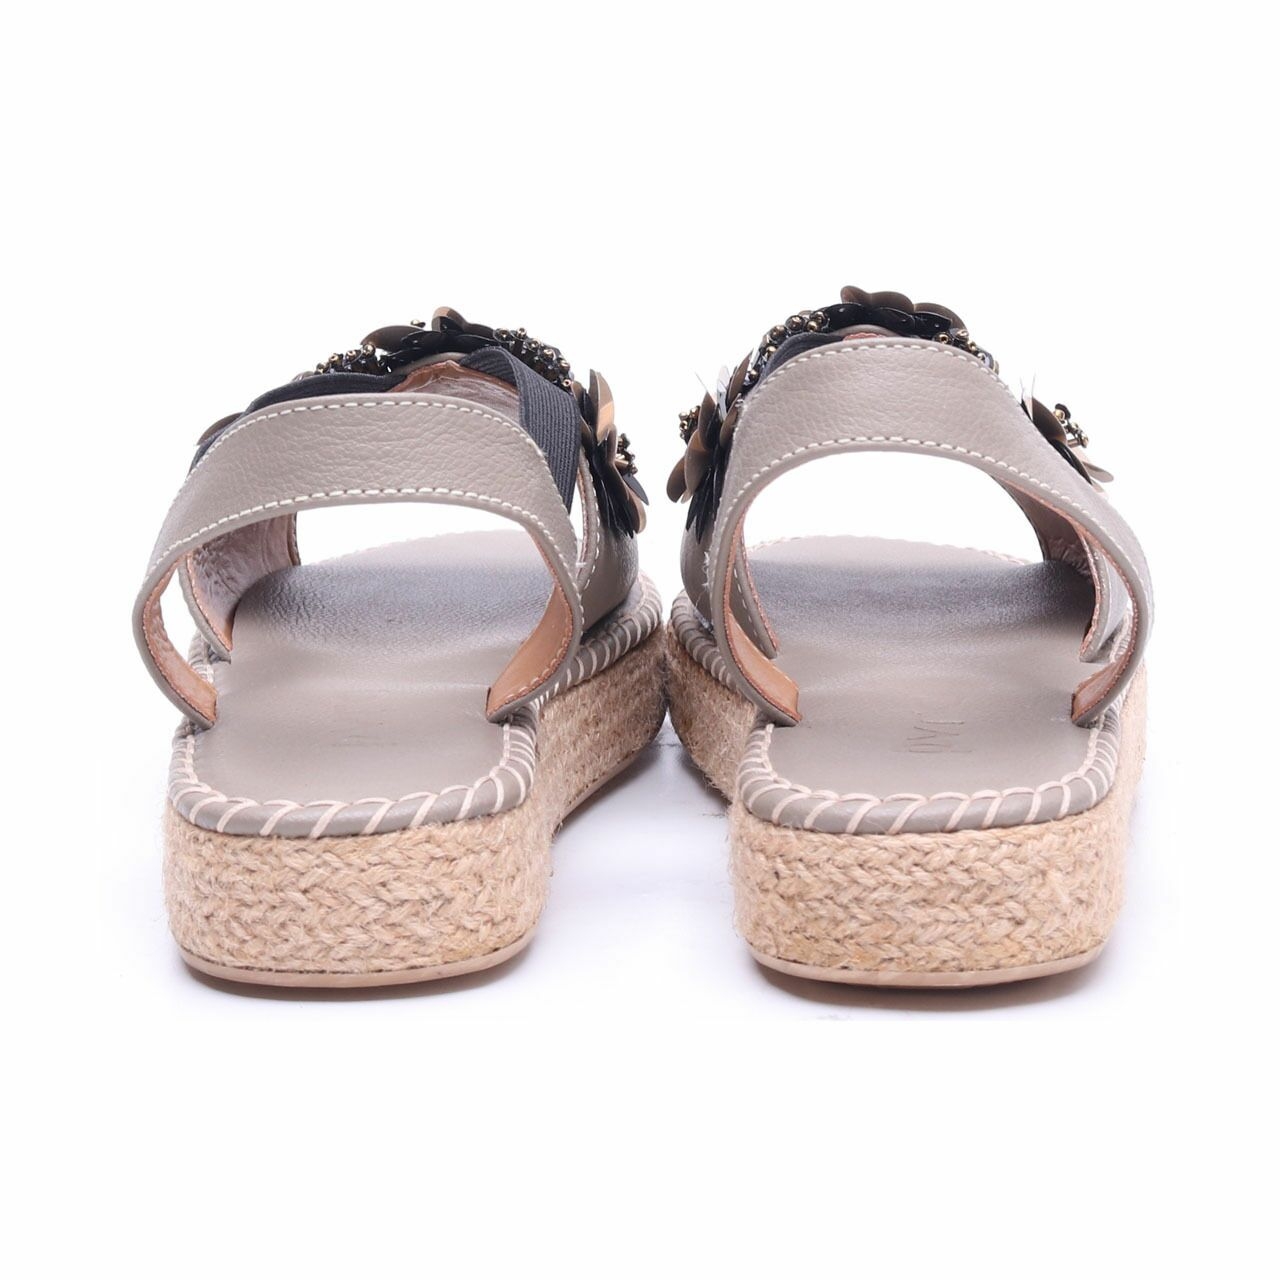 Pvra Stravpa Ash Grey Sequin Sandals